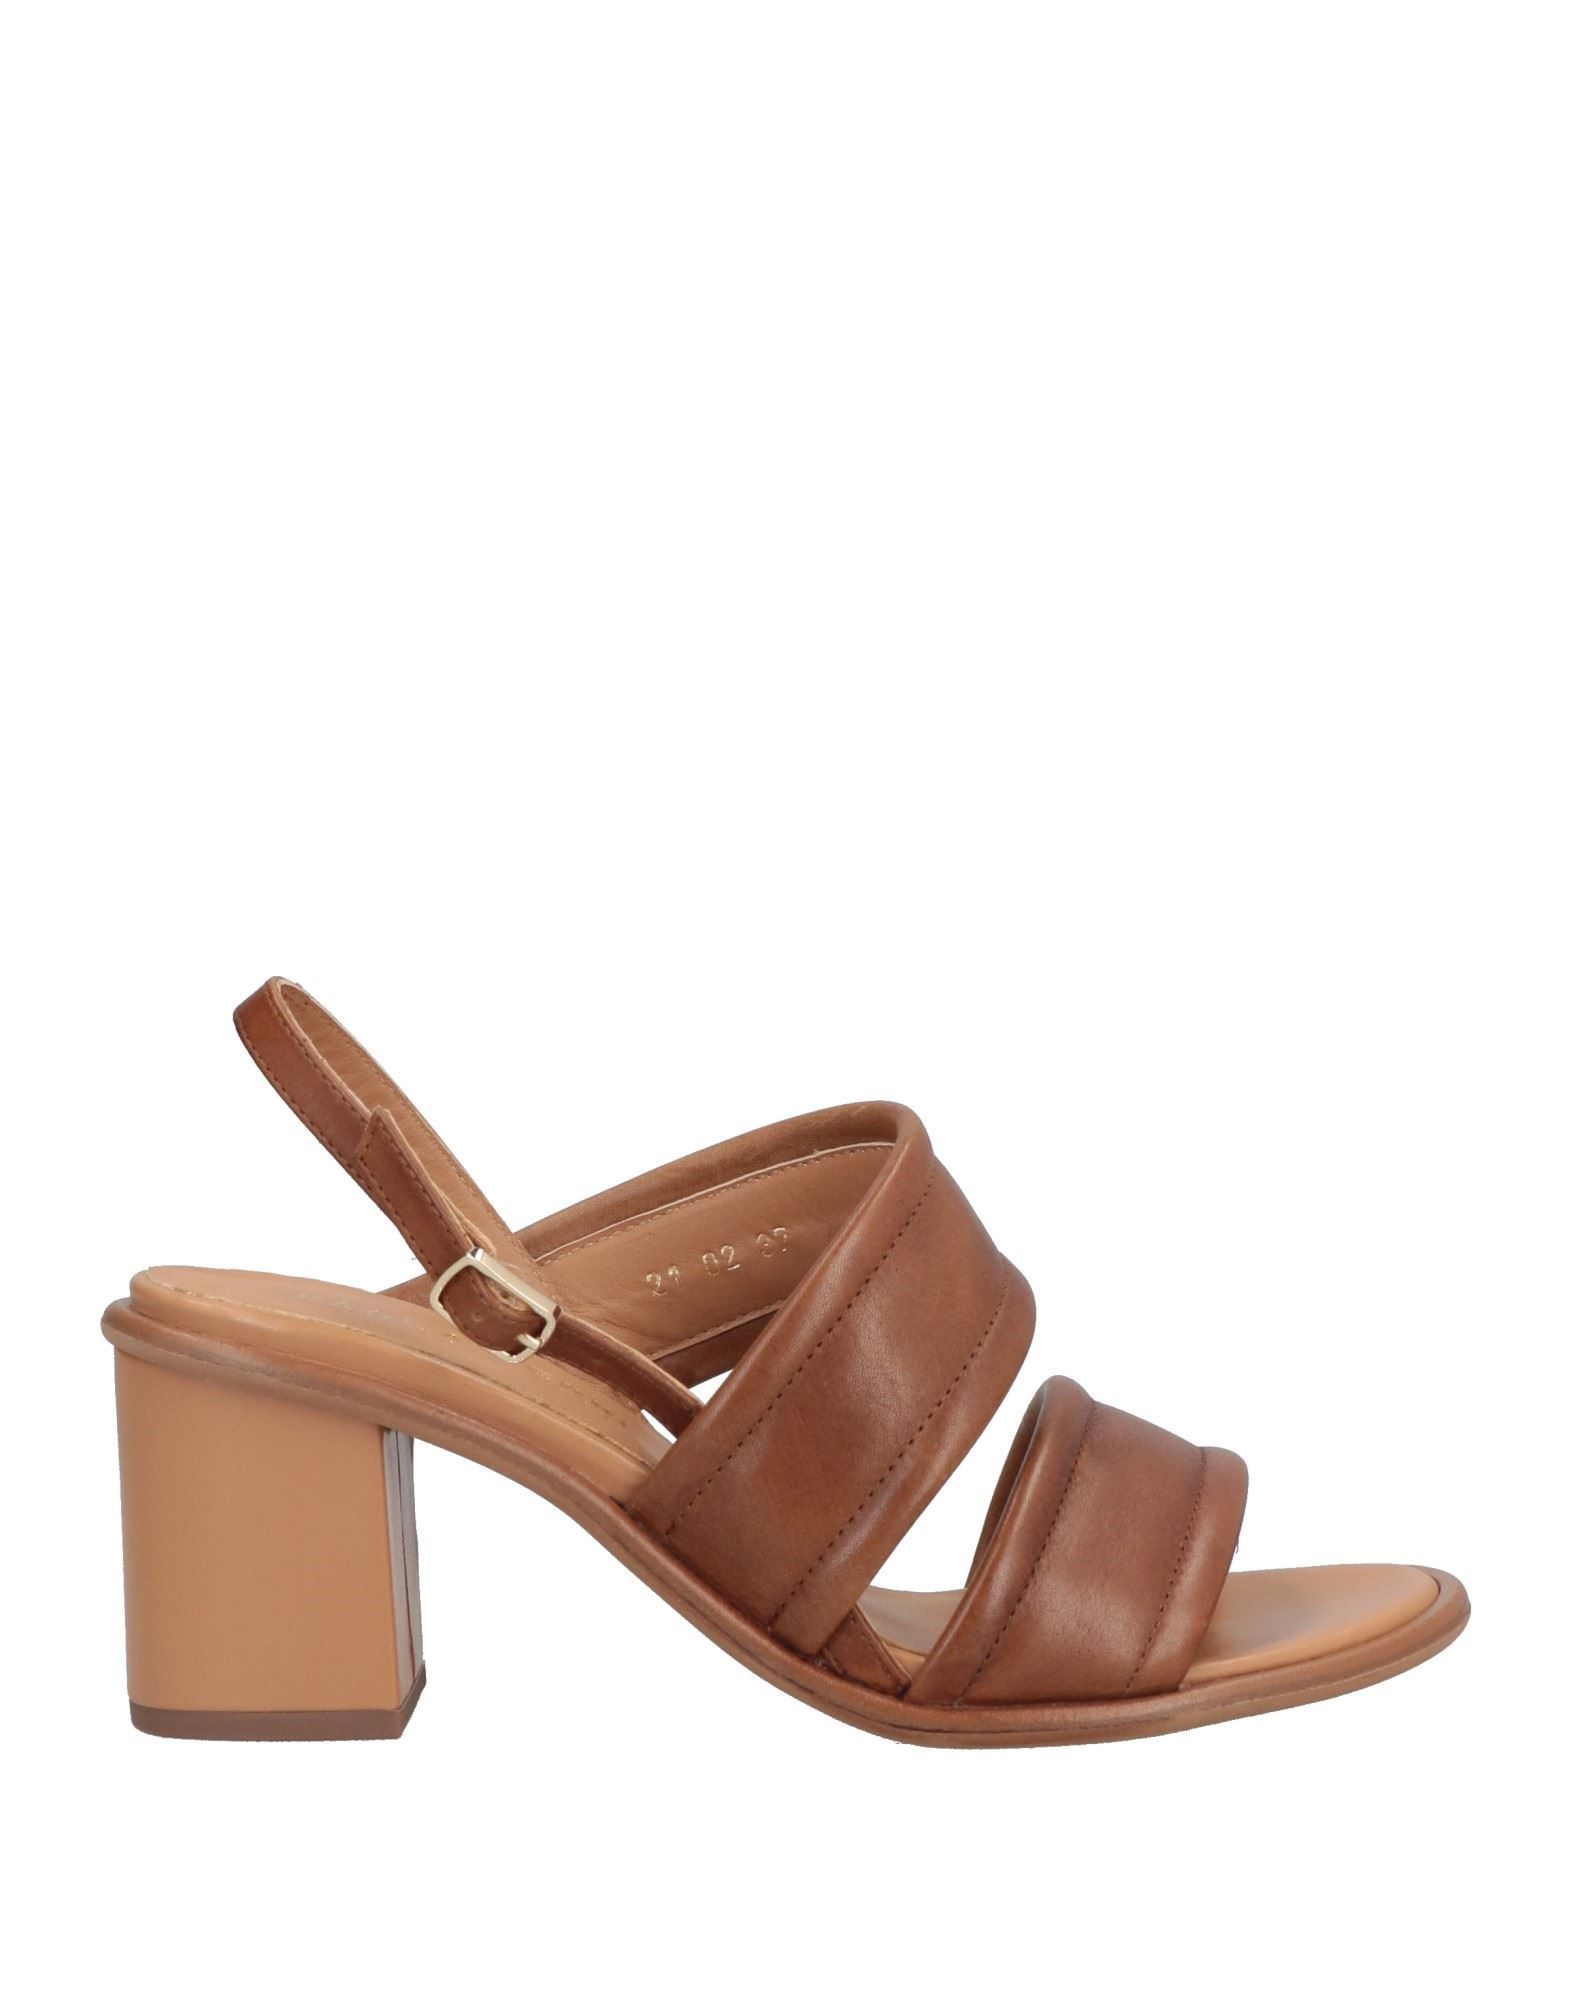 Paola Ferri Sandals In Brown